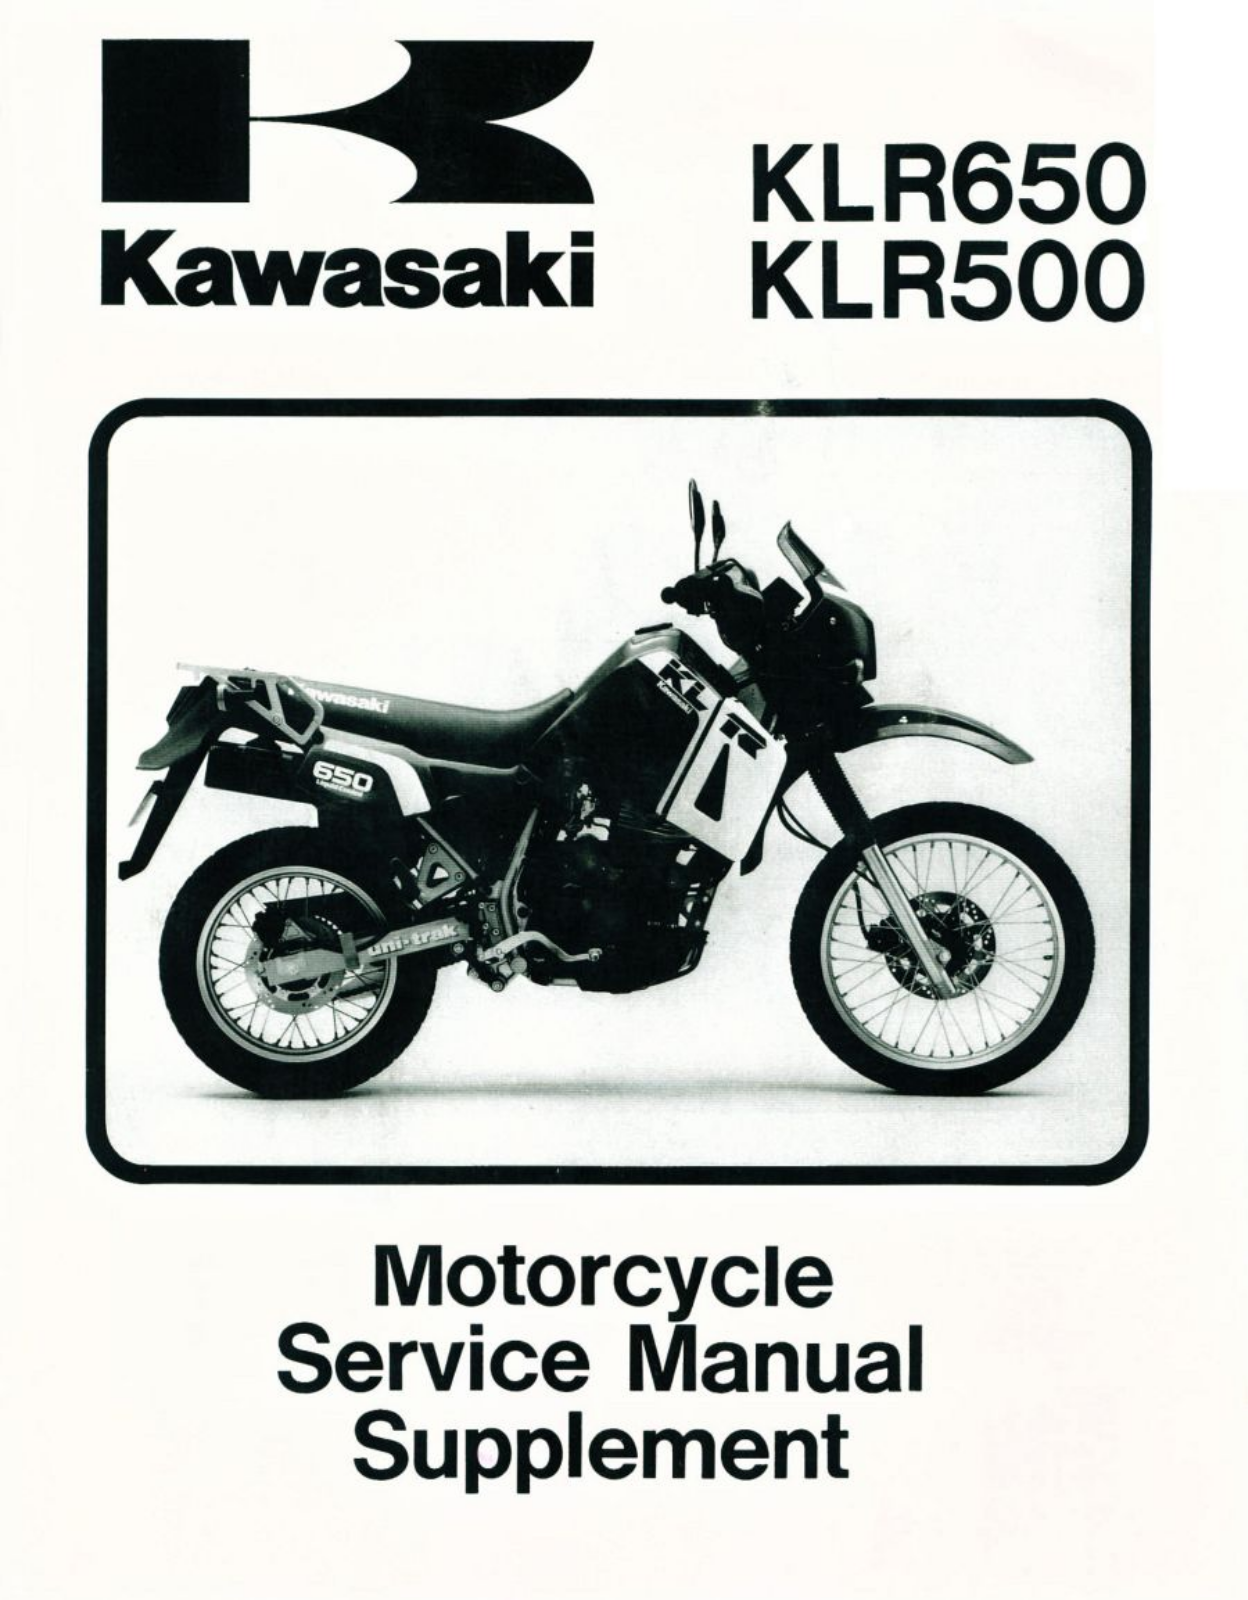 Kawasaki KLR500, KLR650 Service Manual